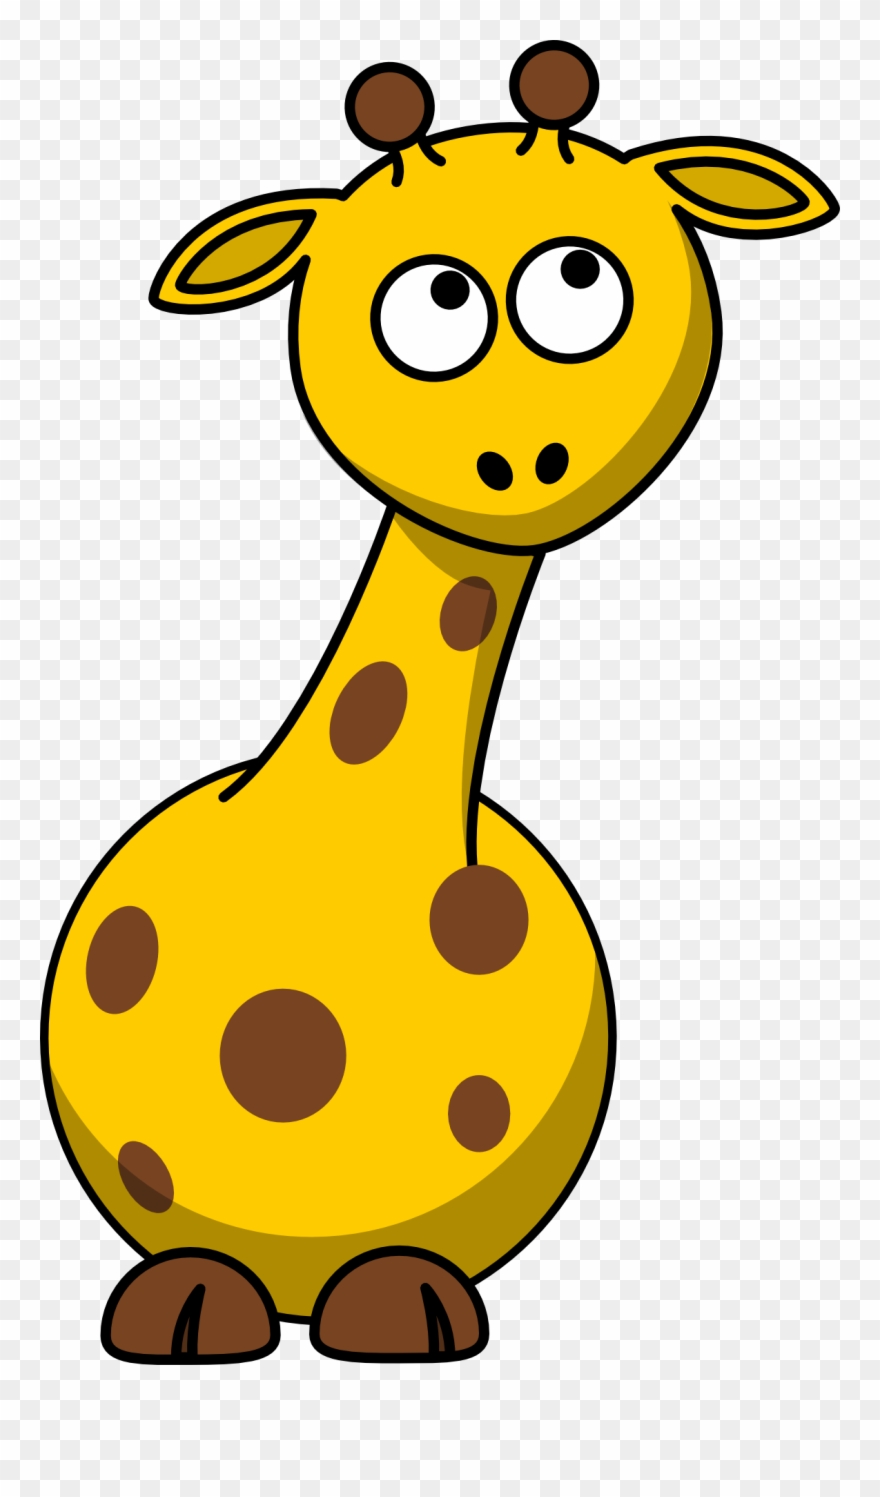 3,561 Baby giraffe vector images at Vectorified.com